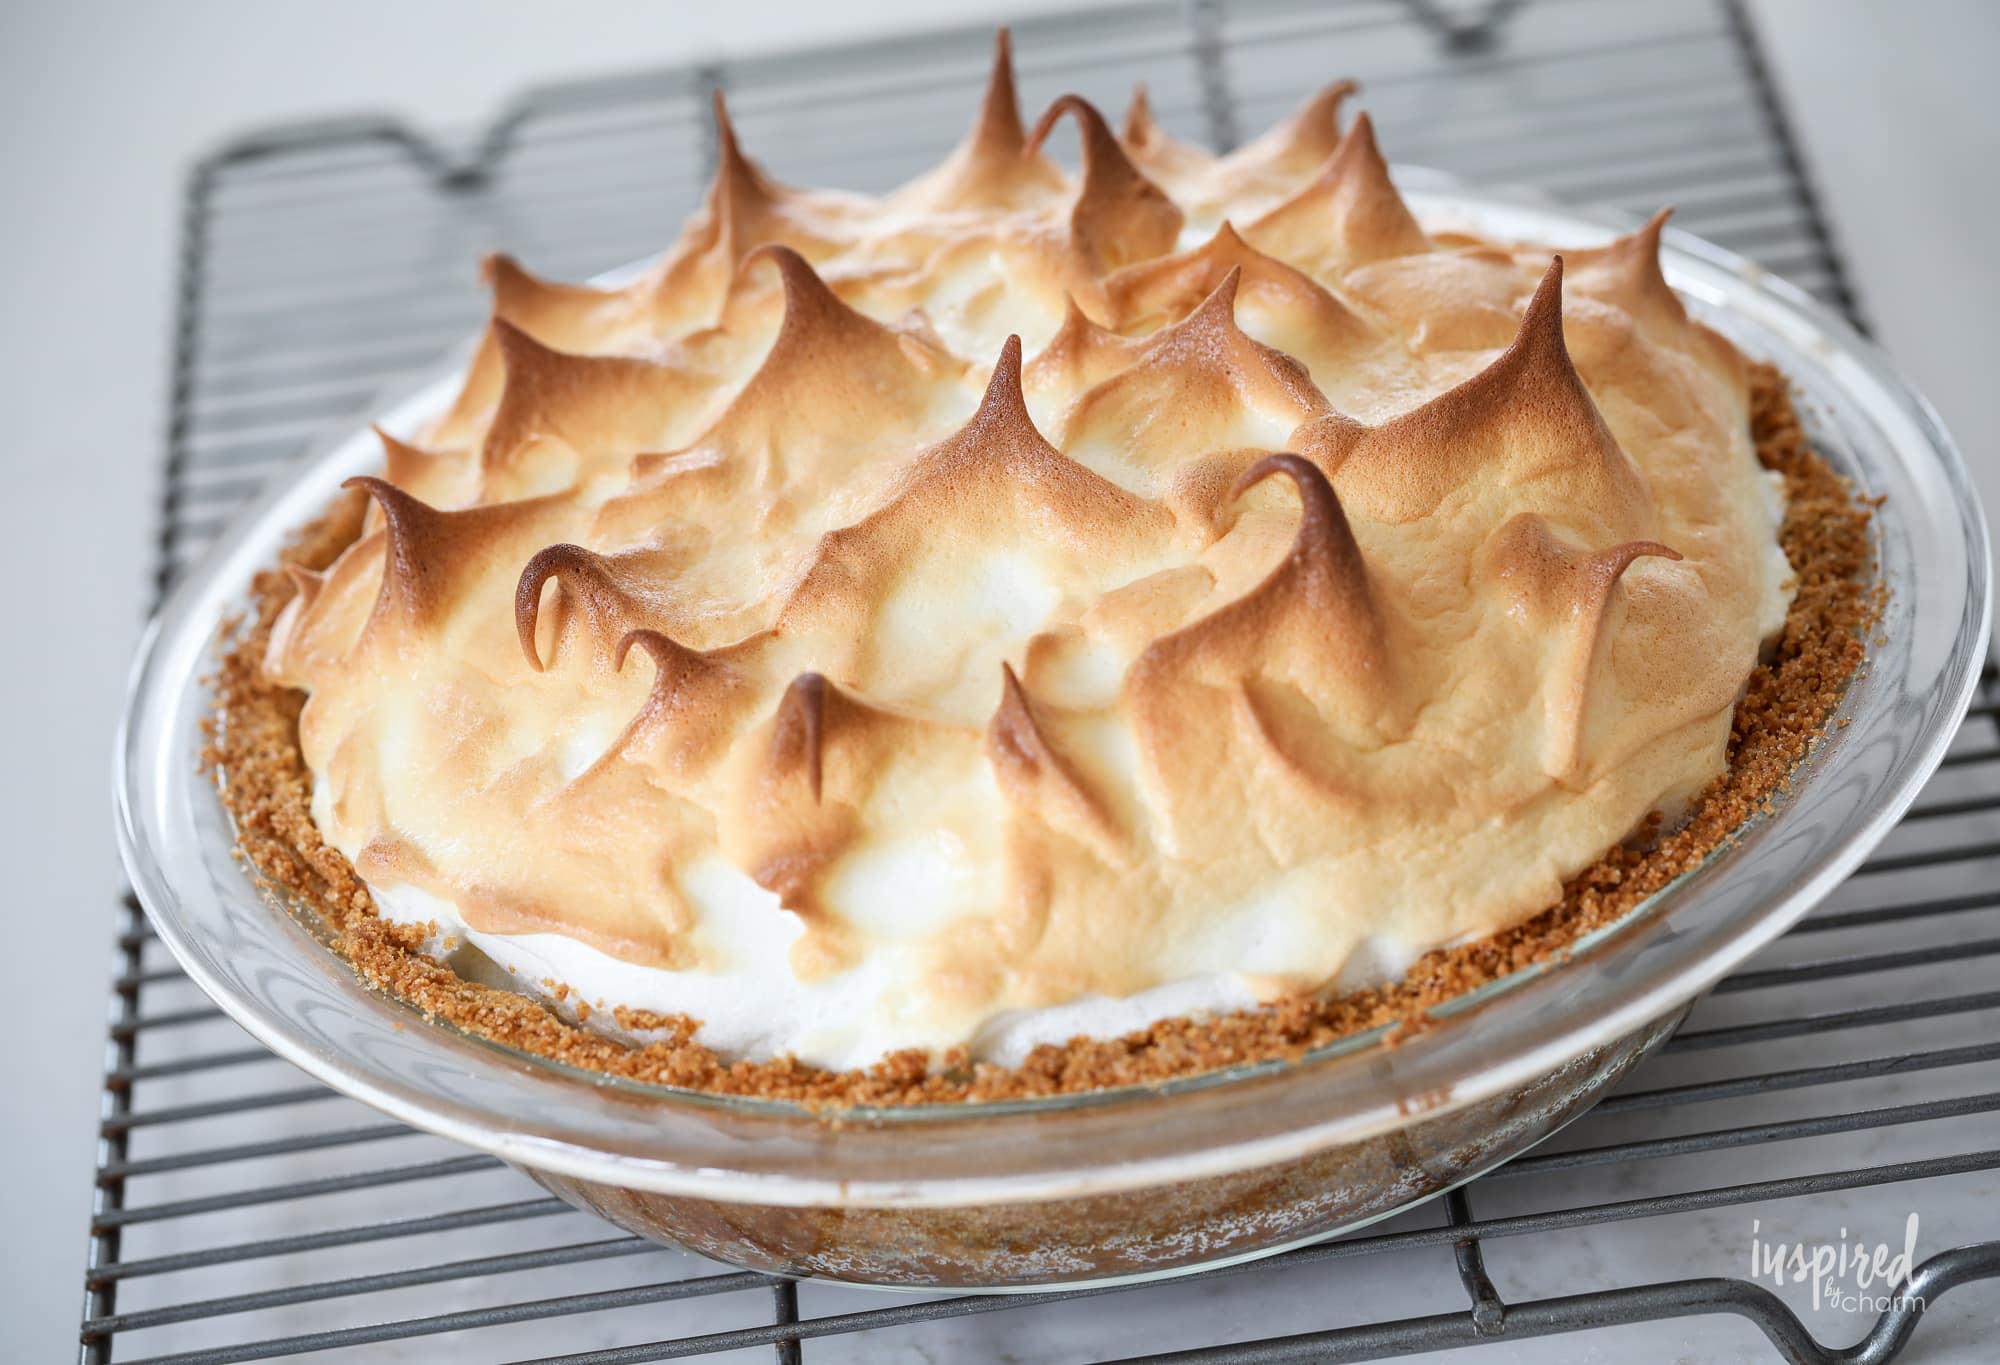 Learn how to make this delicious Graham Cracker Cream Pie. #grahamcracker #cream #pie #dessert #recipe #creampie